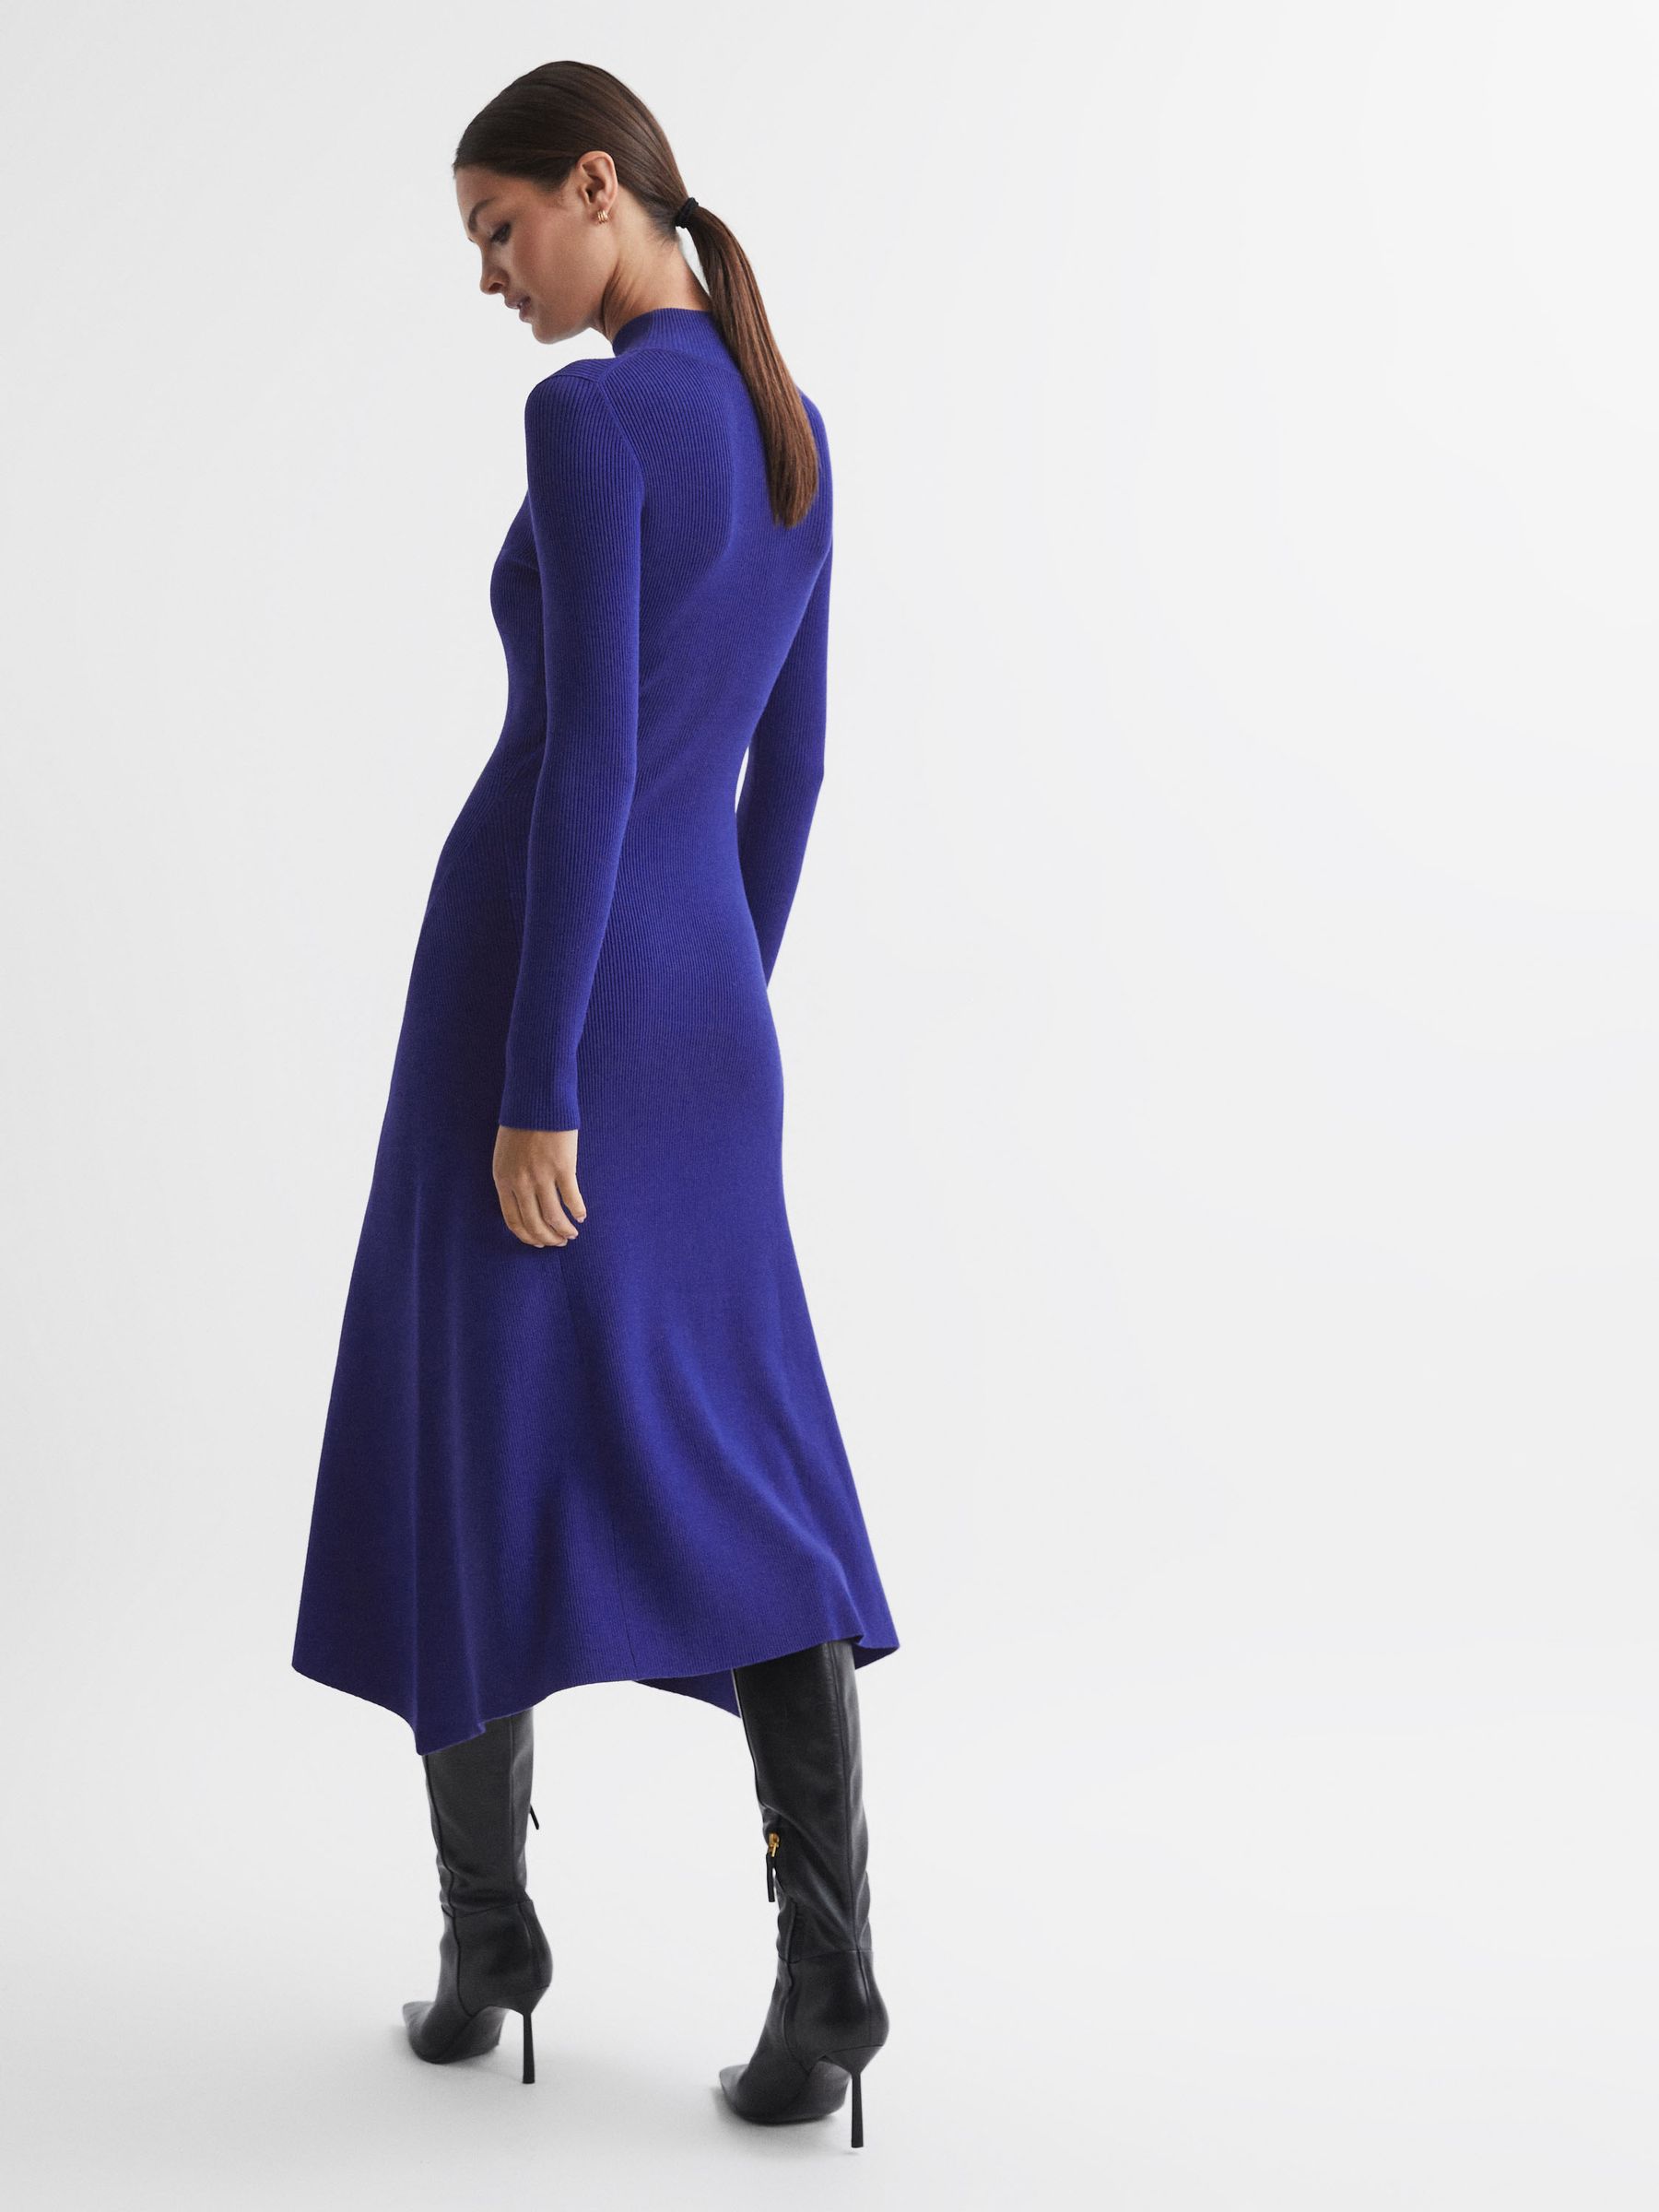 Reiss Chrissy Knitted Bodycon Midi Dress | REISS USA